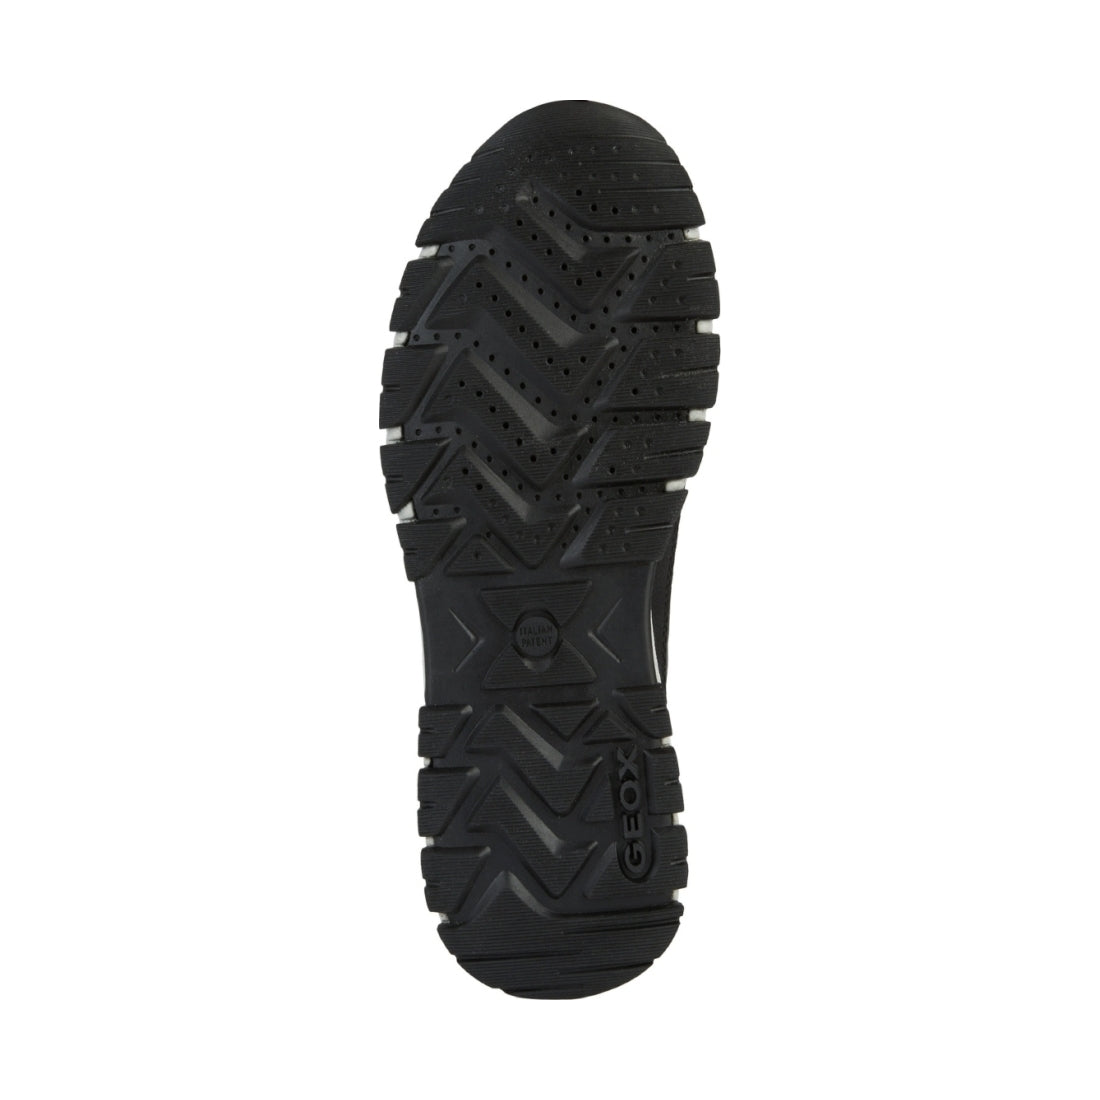 Geox mens Black Anthracite delray abx sport shoe | Vilbury London